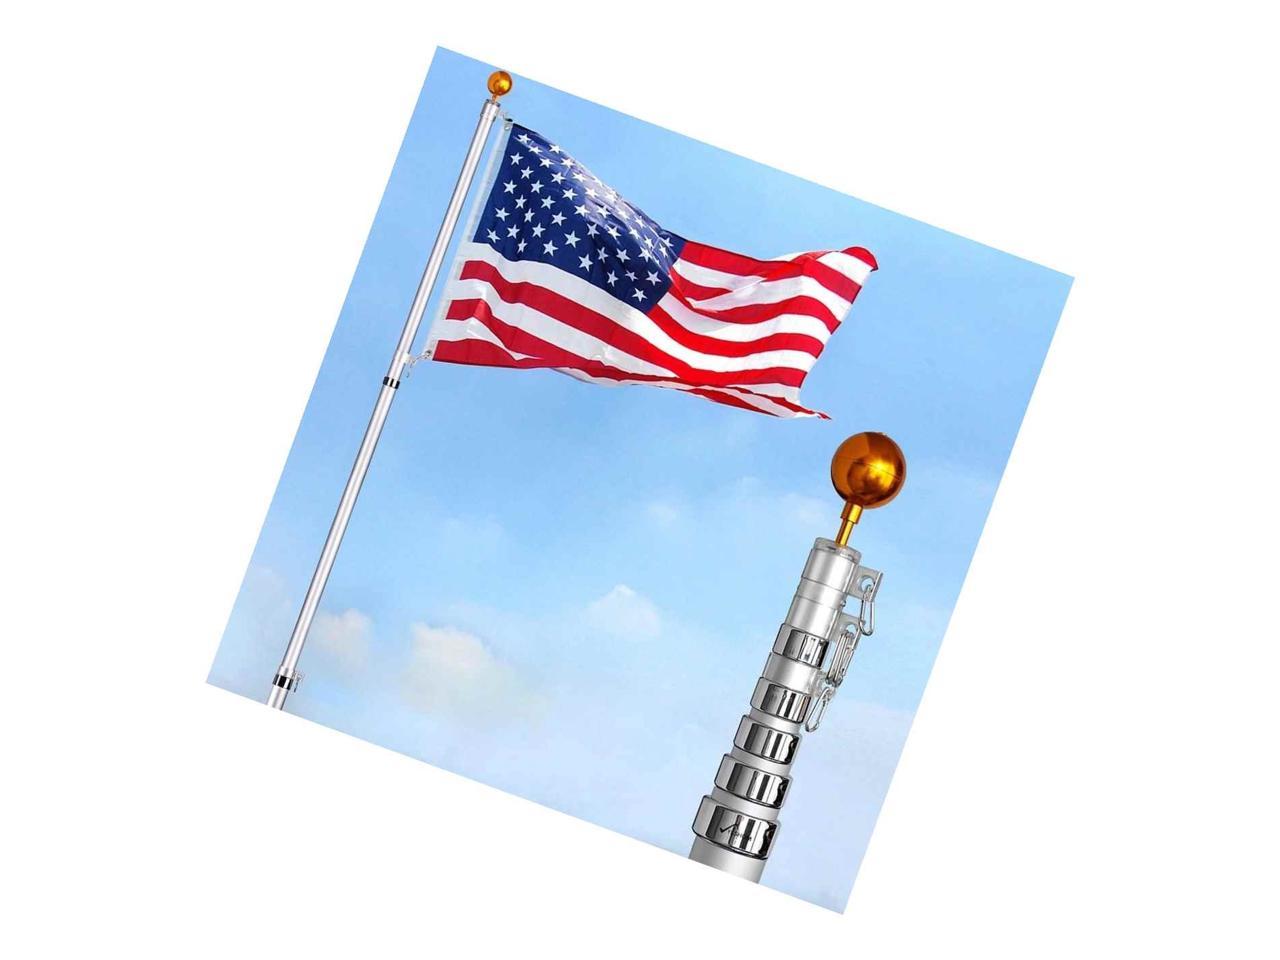 10x15 ft Deluxe US American Flag Large Jumbo Sewn Nylon Embroidered Stars USA 